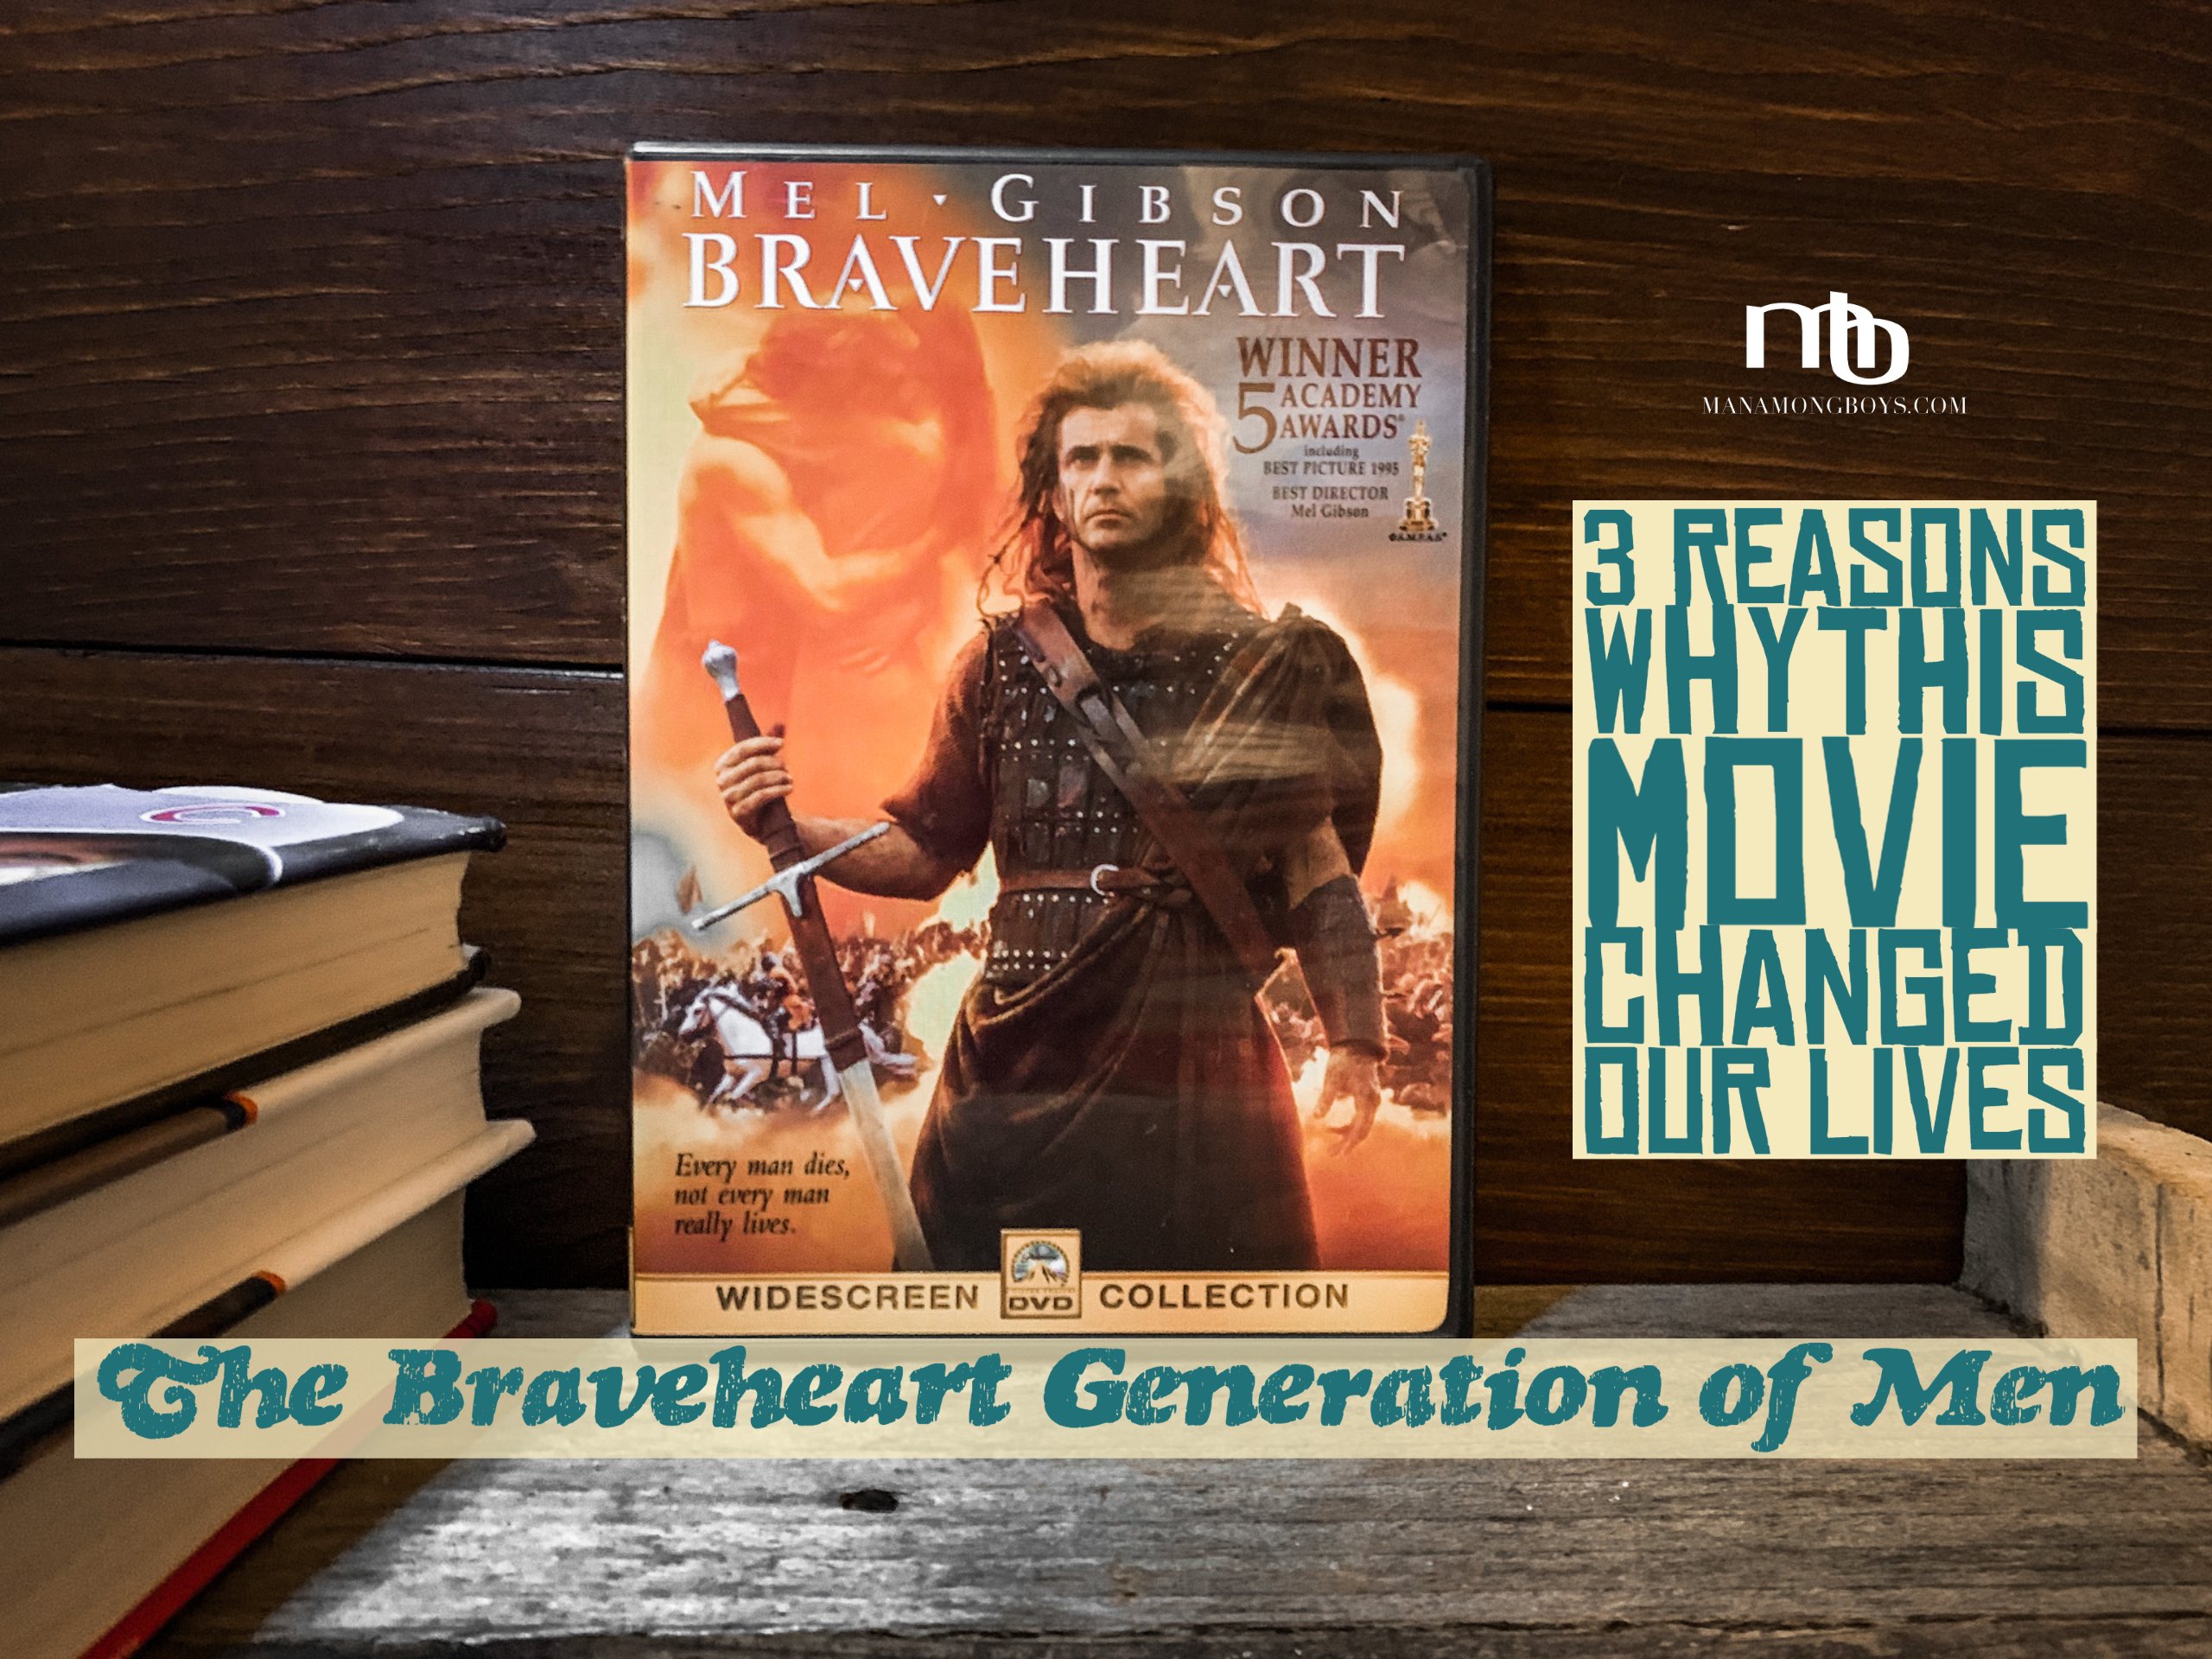 The Braveheart Generation of Men